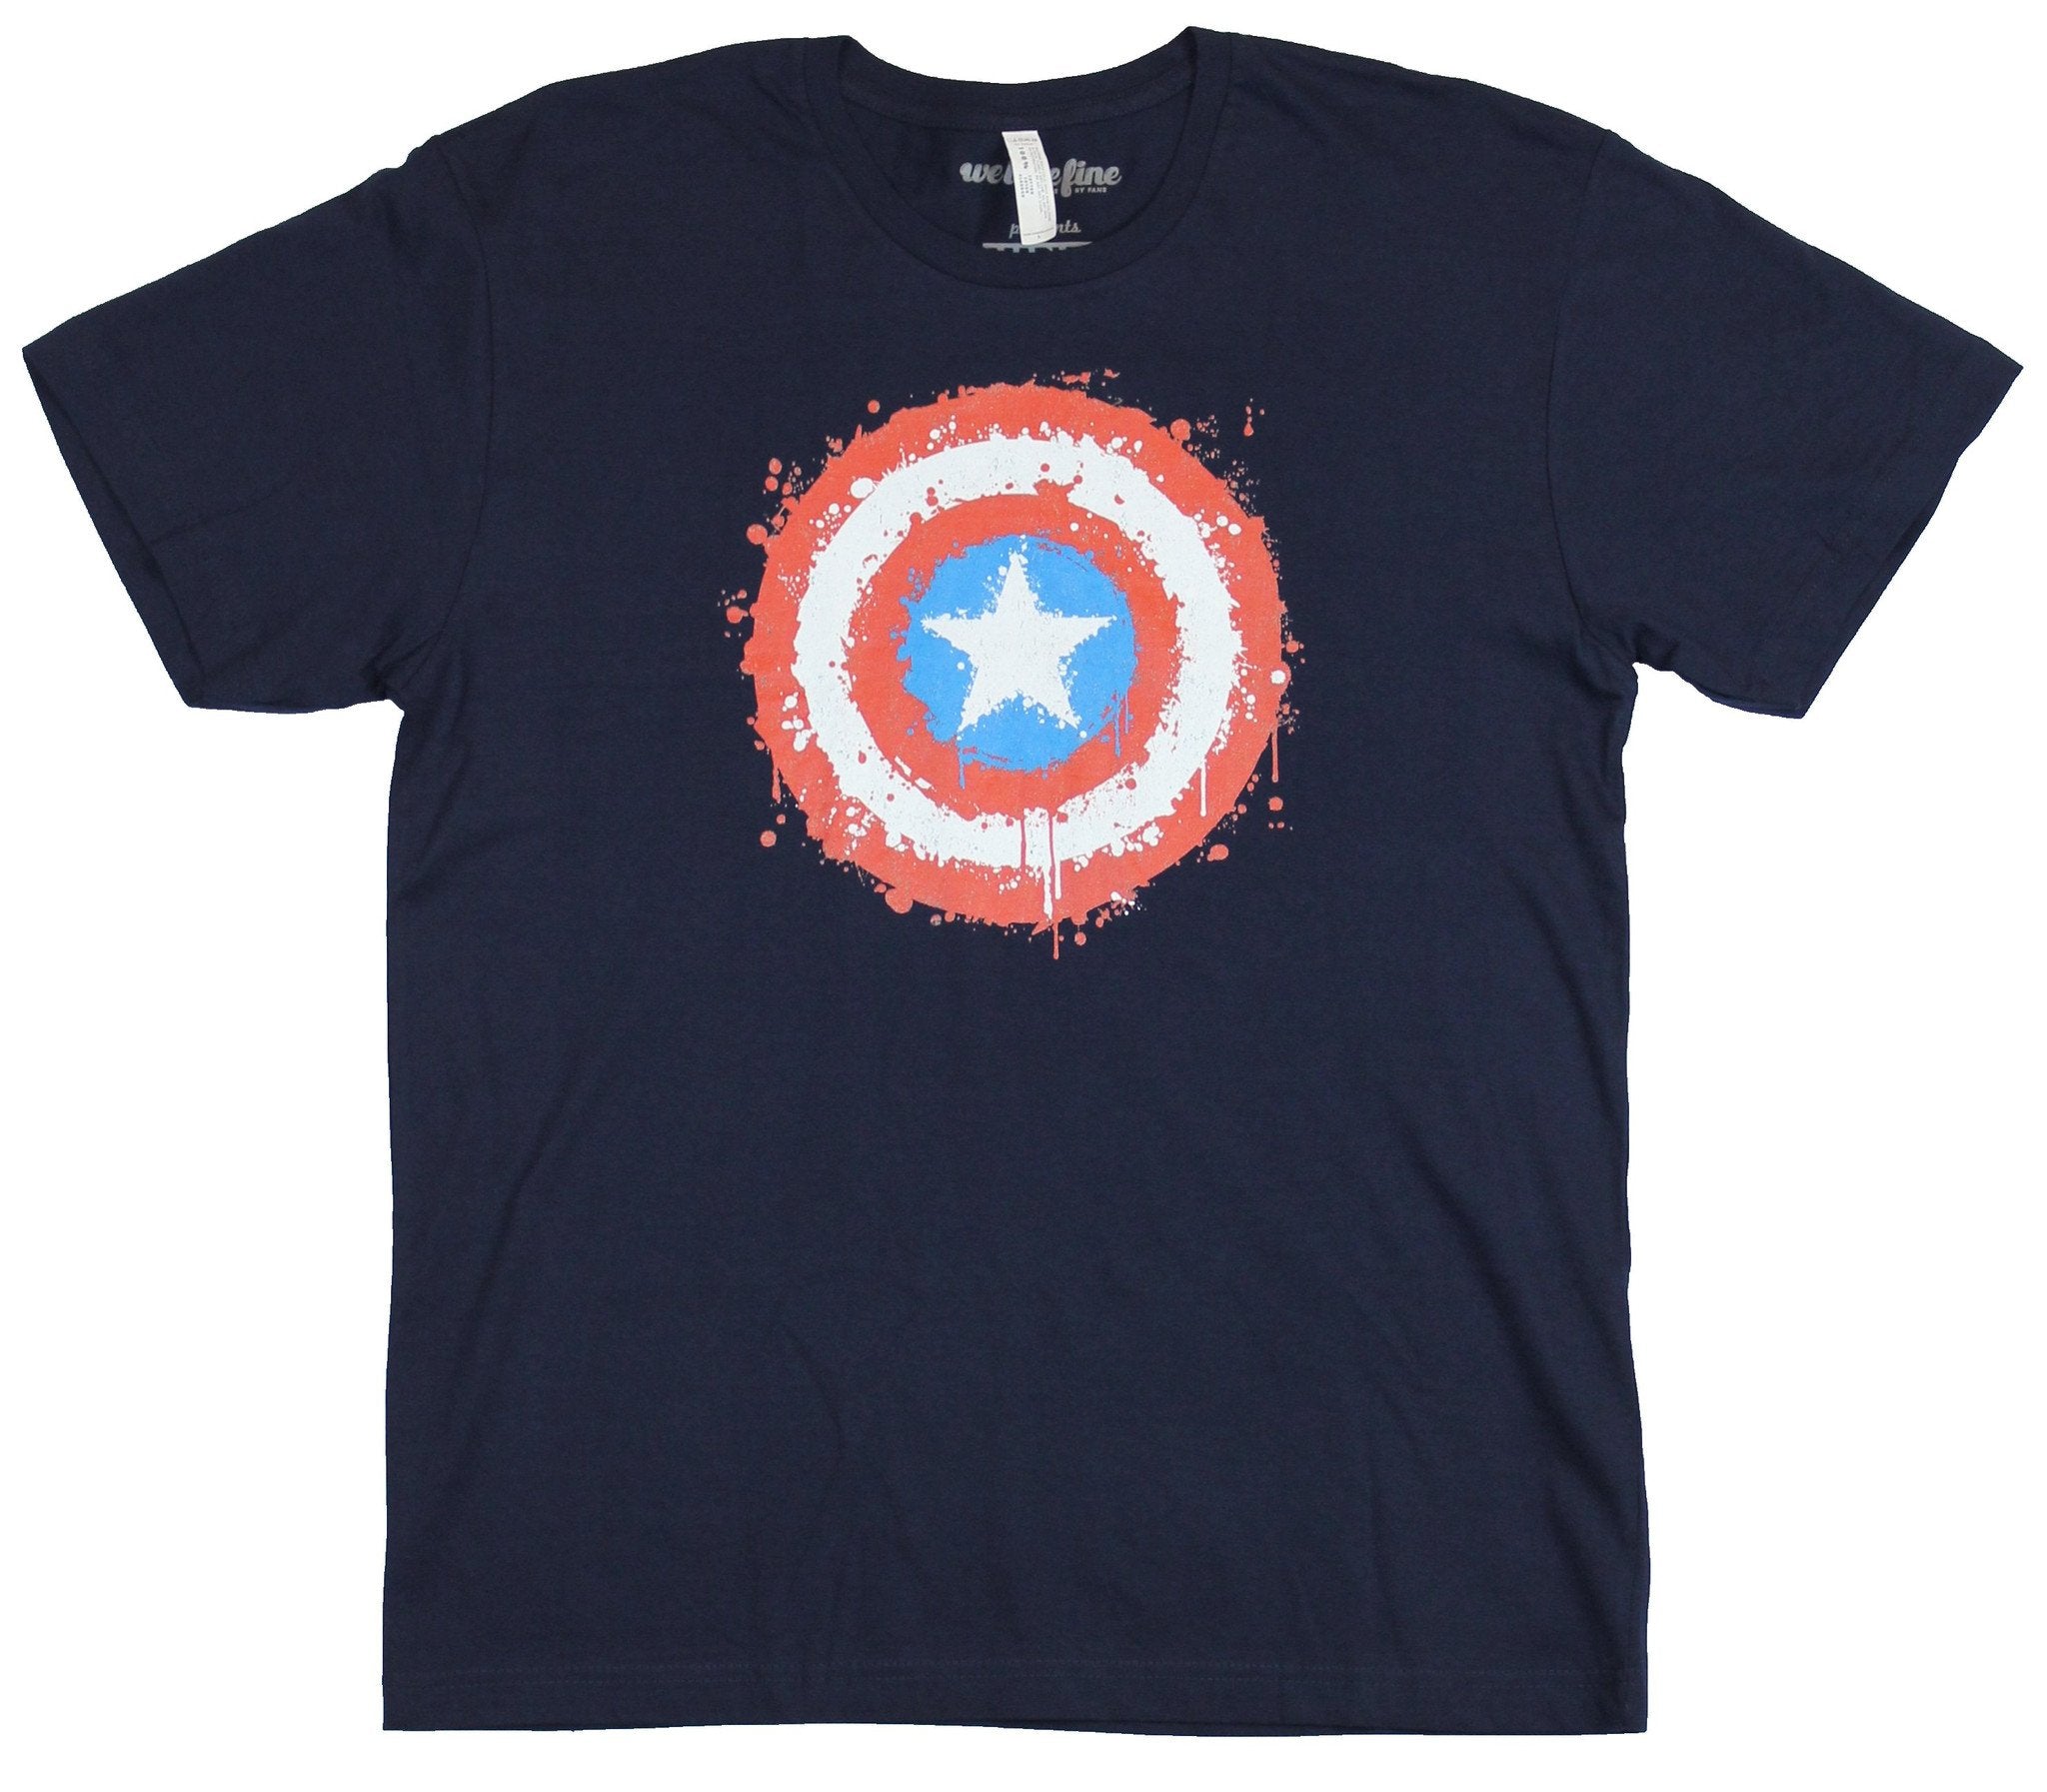 Captain America (Marvel)  Mens T-Shirt - Classic Shield Made of Little Splats